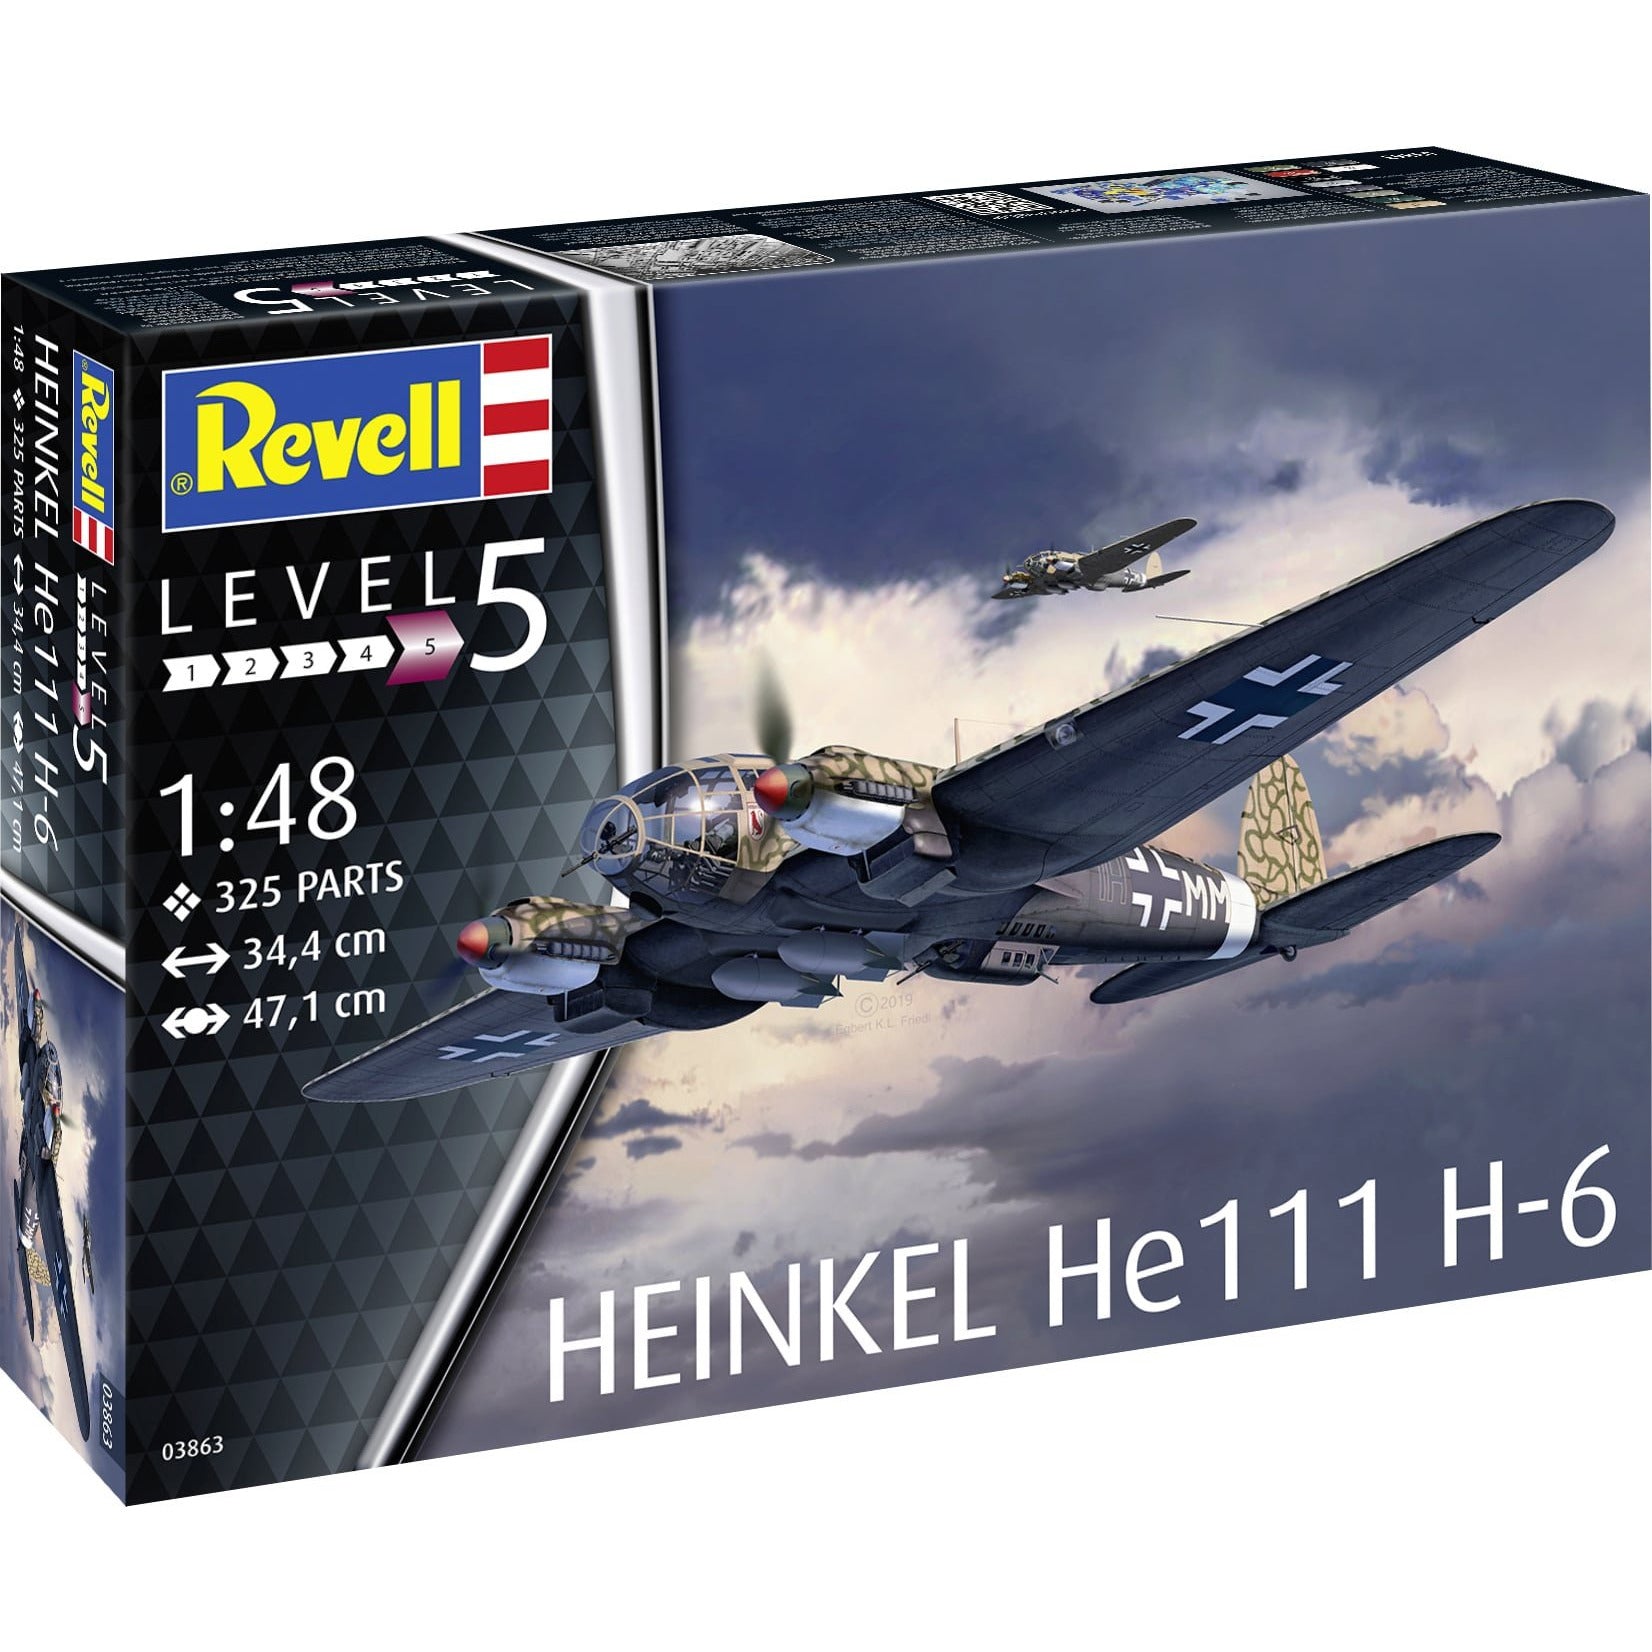 Heinkel He111 H-6 1/48 by Revell